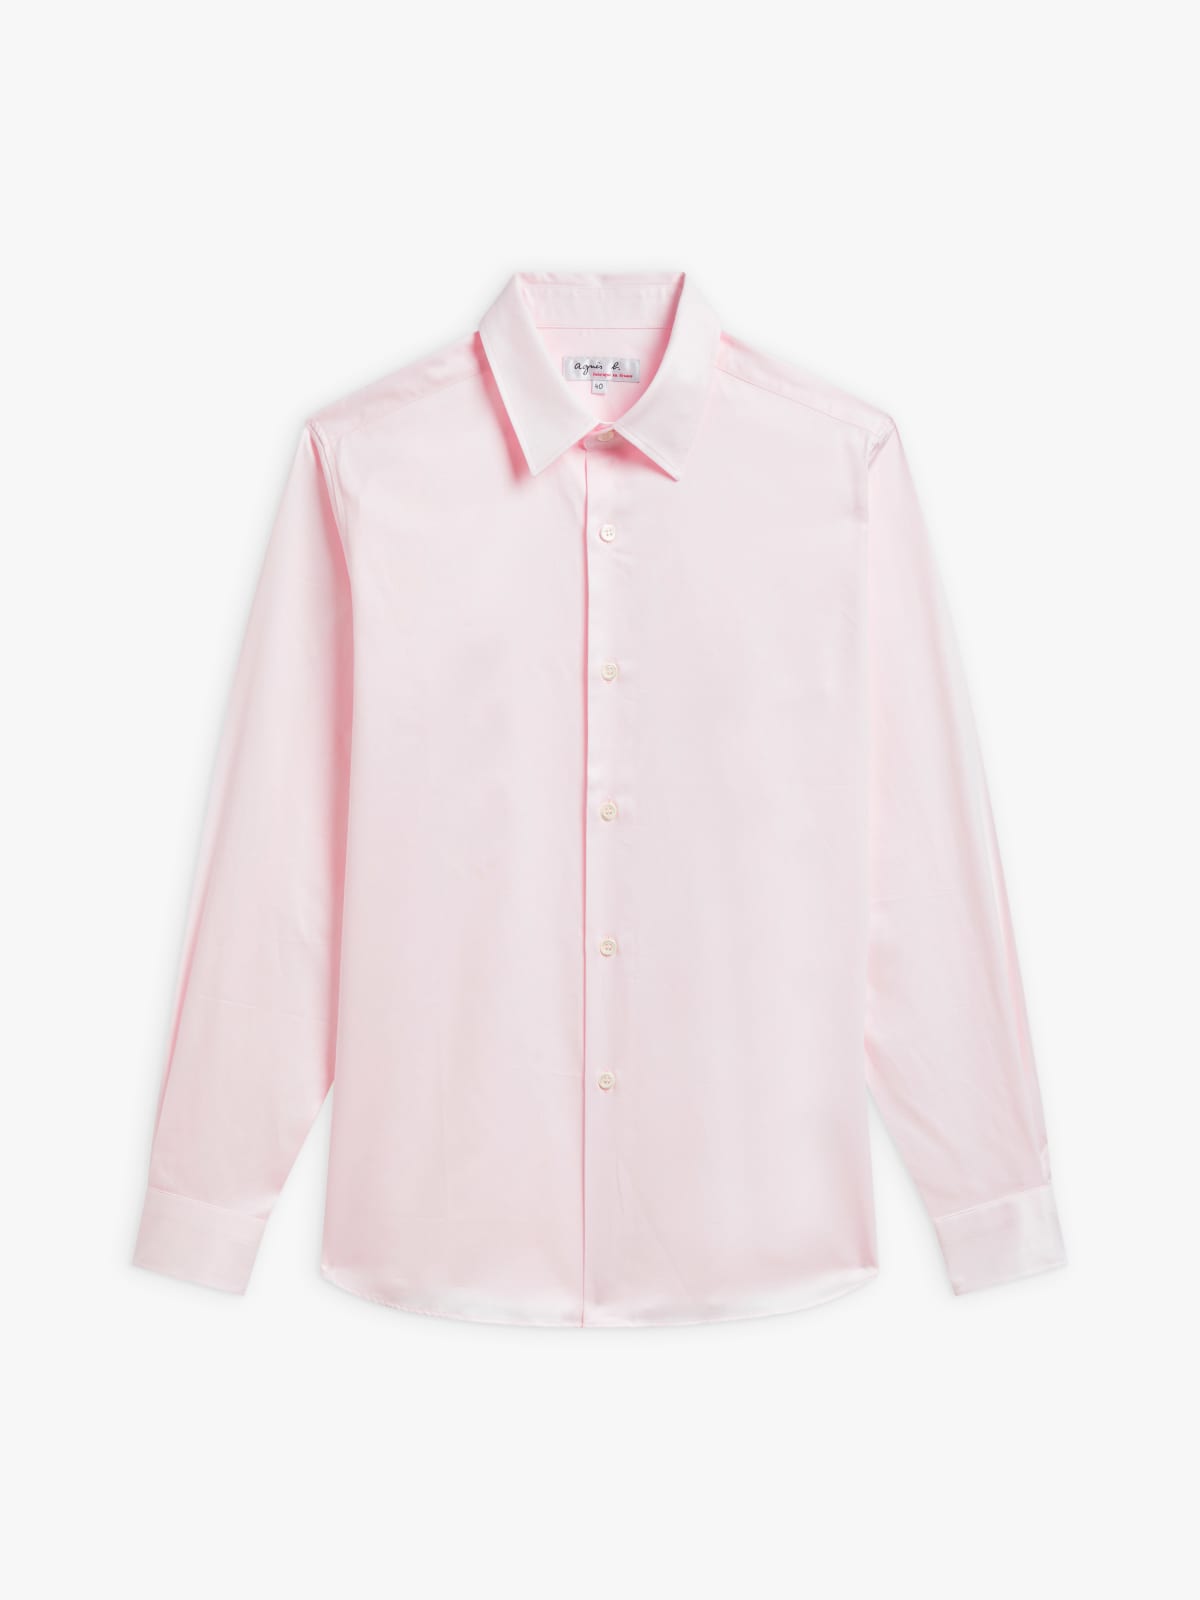 pink Andy shirt